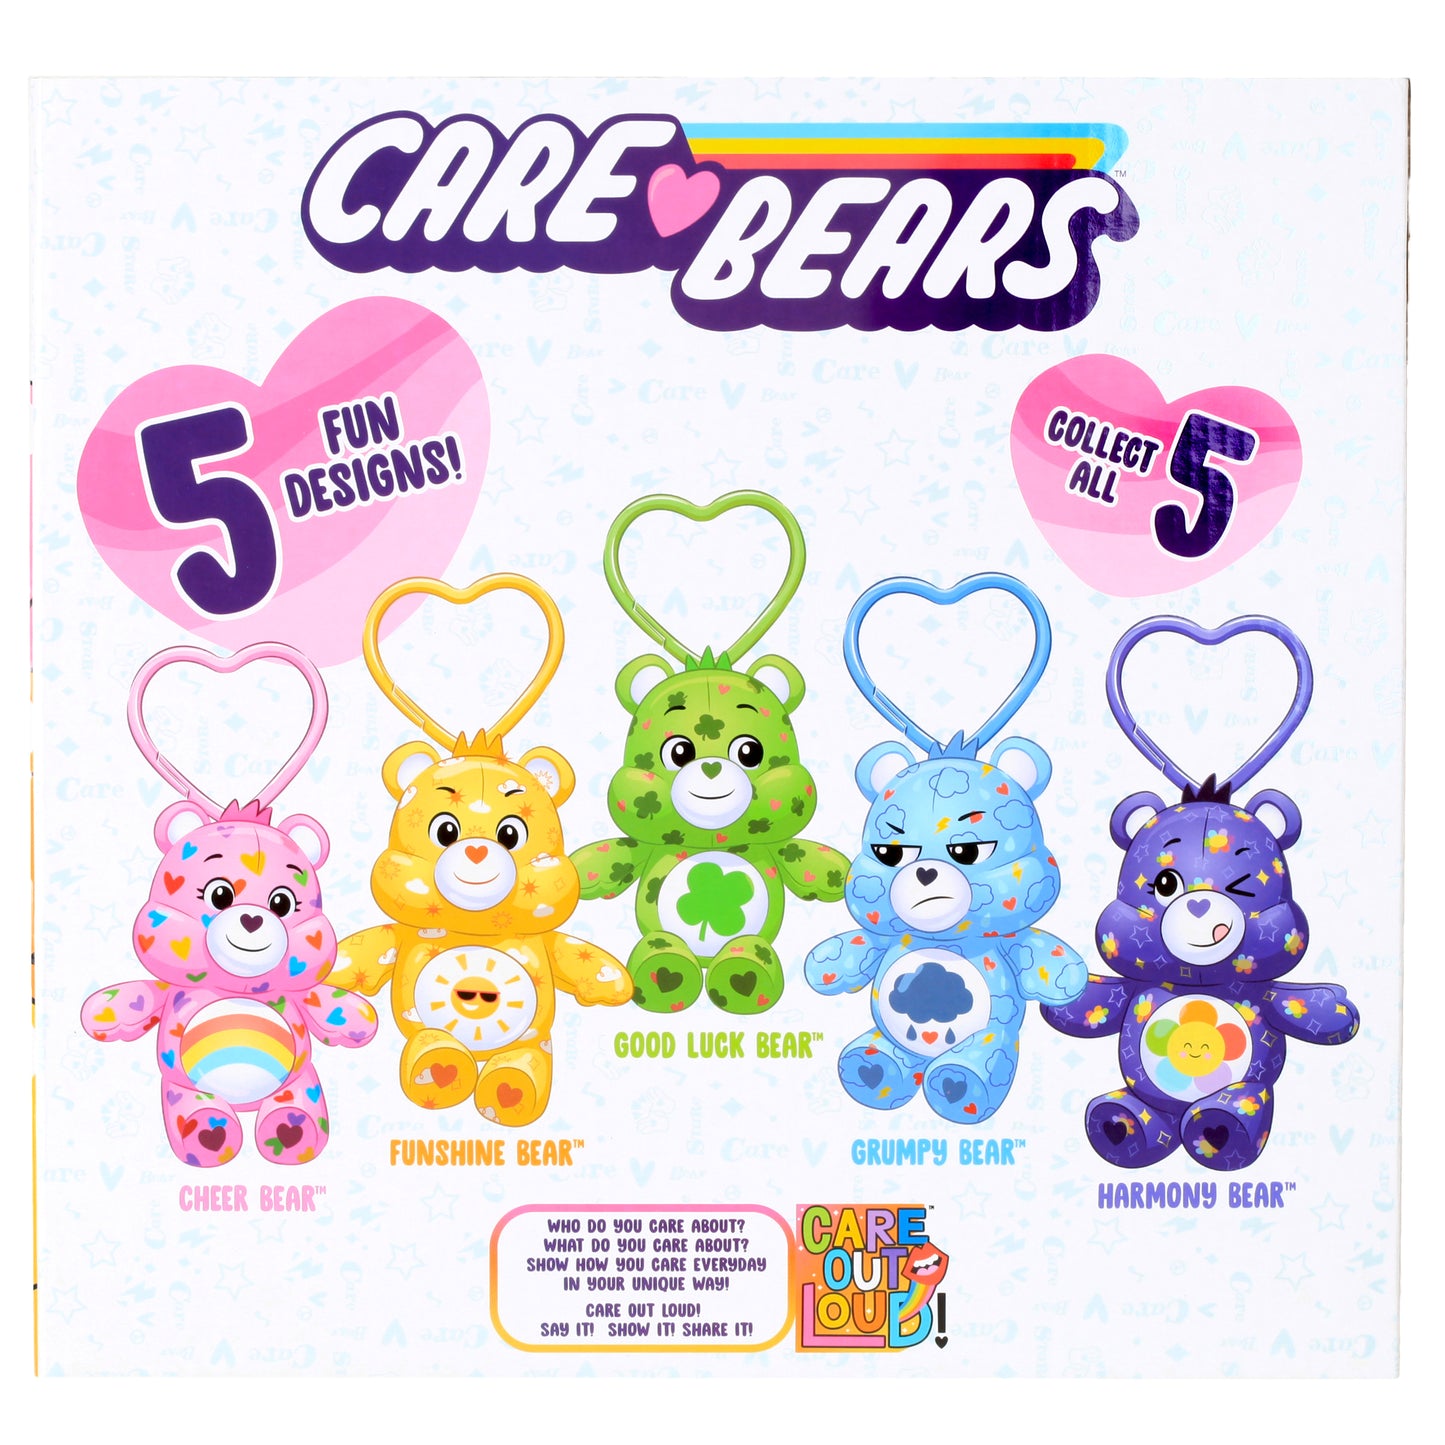 Care bears Harmony Bear Dangler